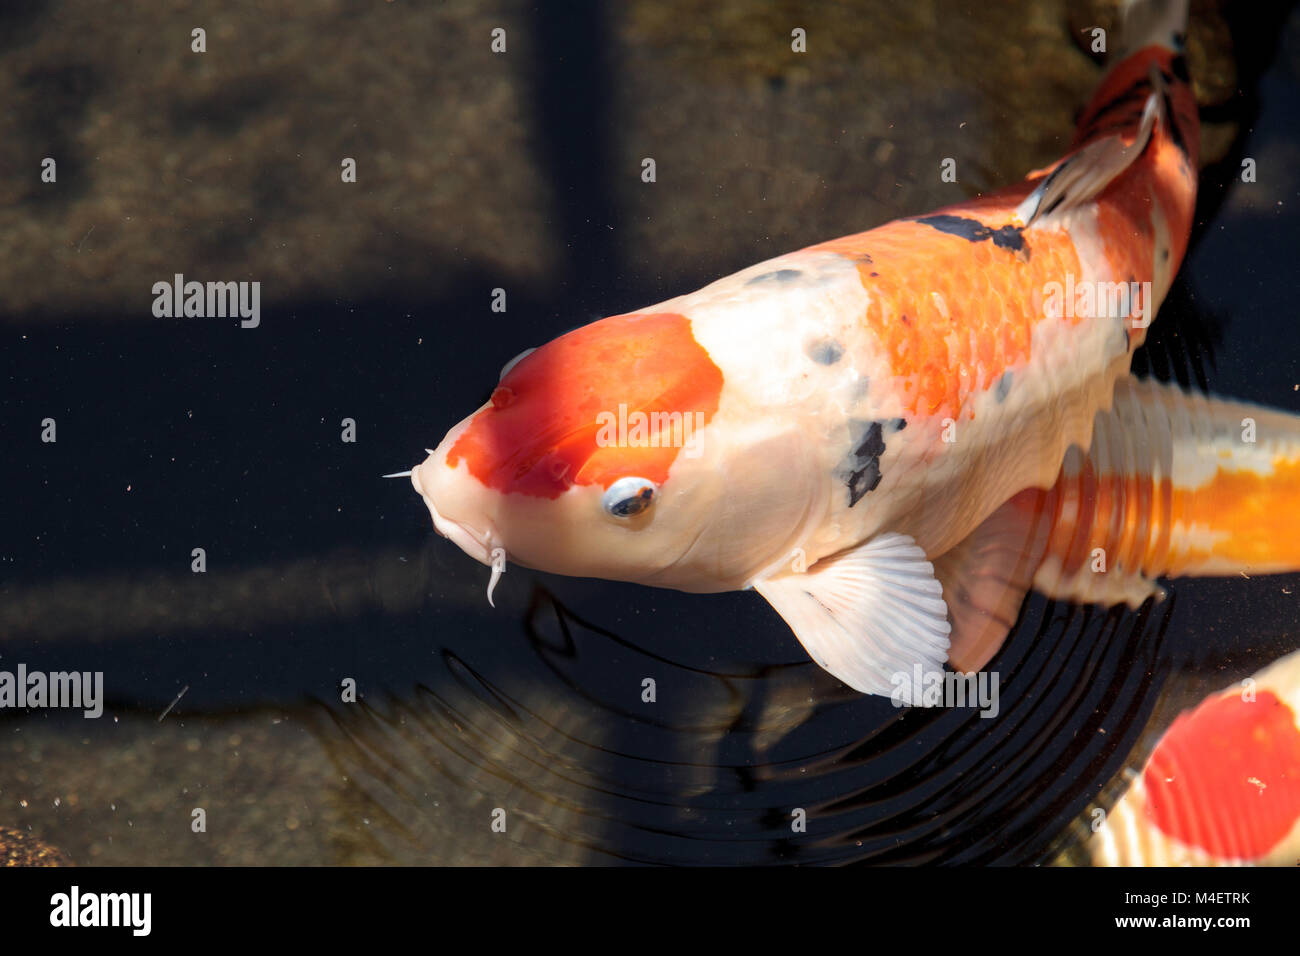 Uno spettacolare pesce Koi, Cyprinus carpio haematopterus Foto Stock